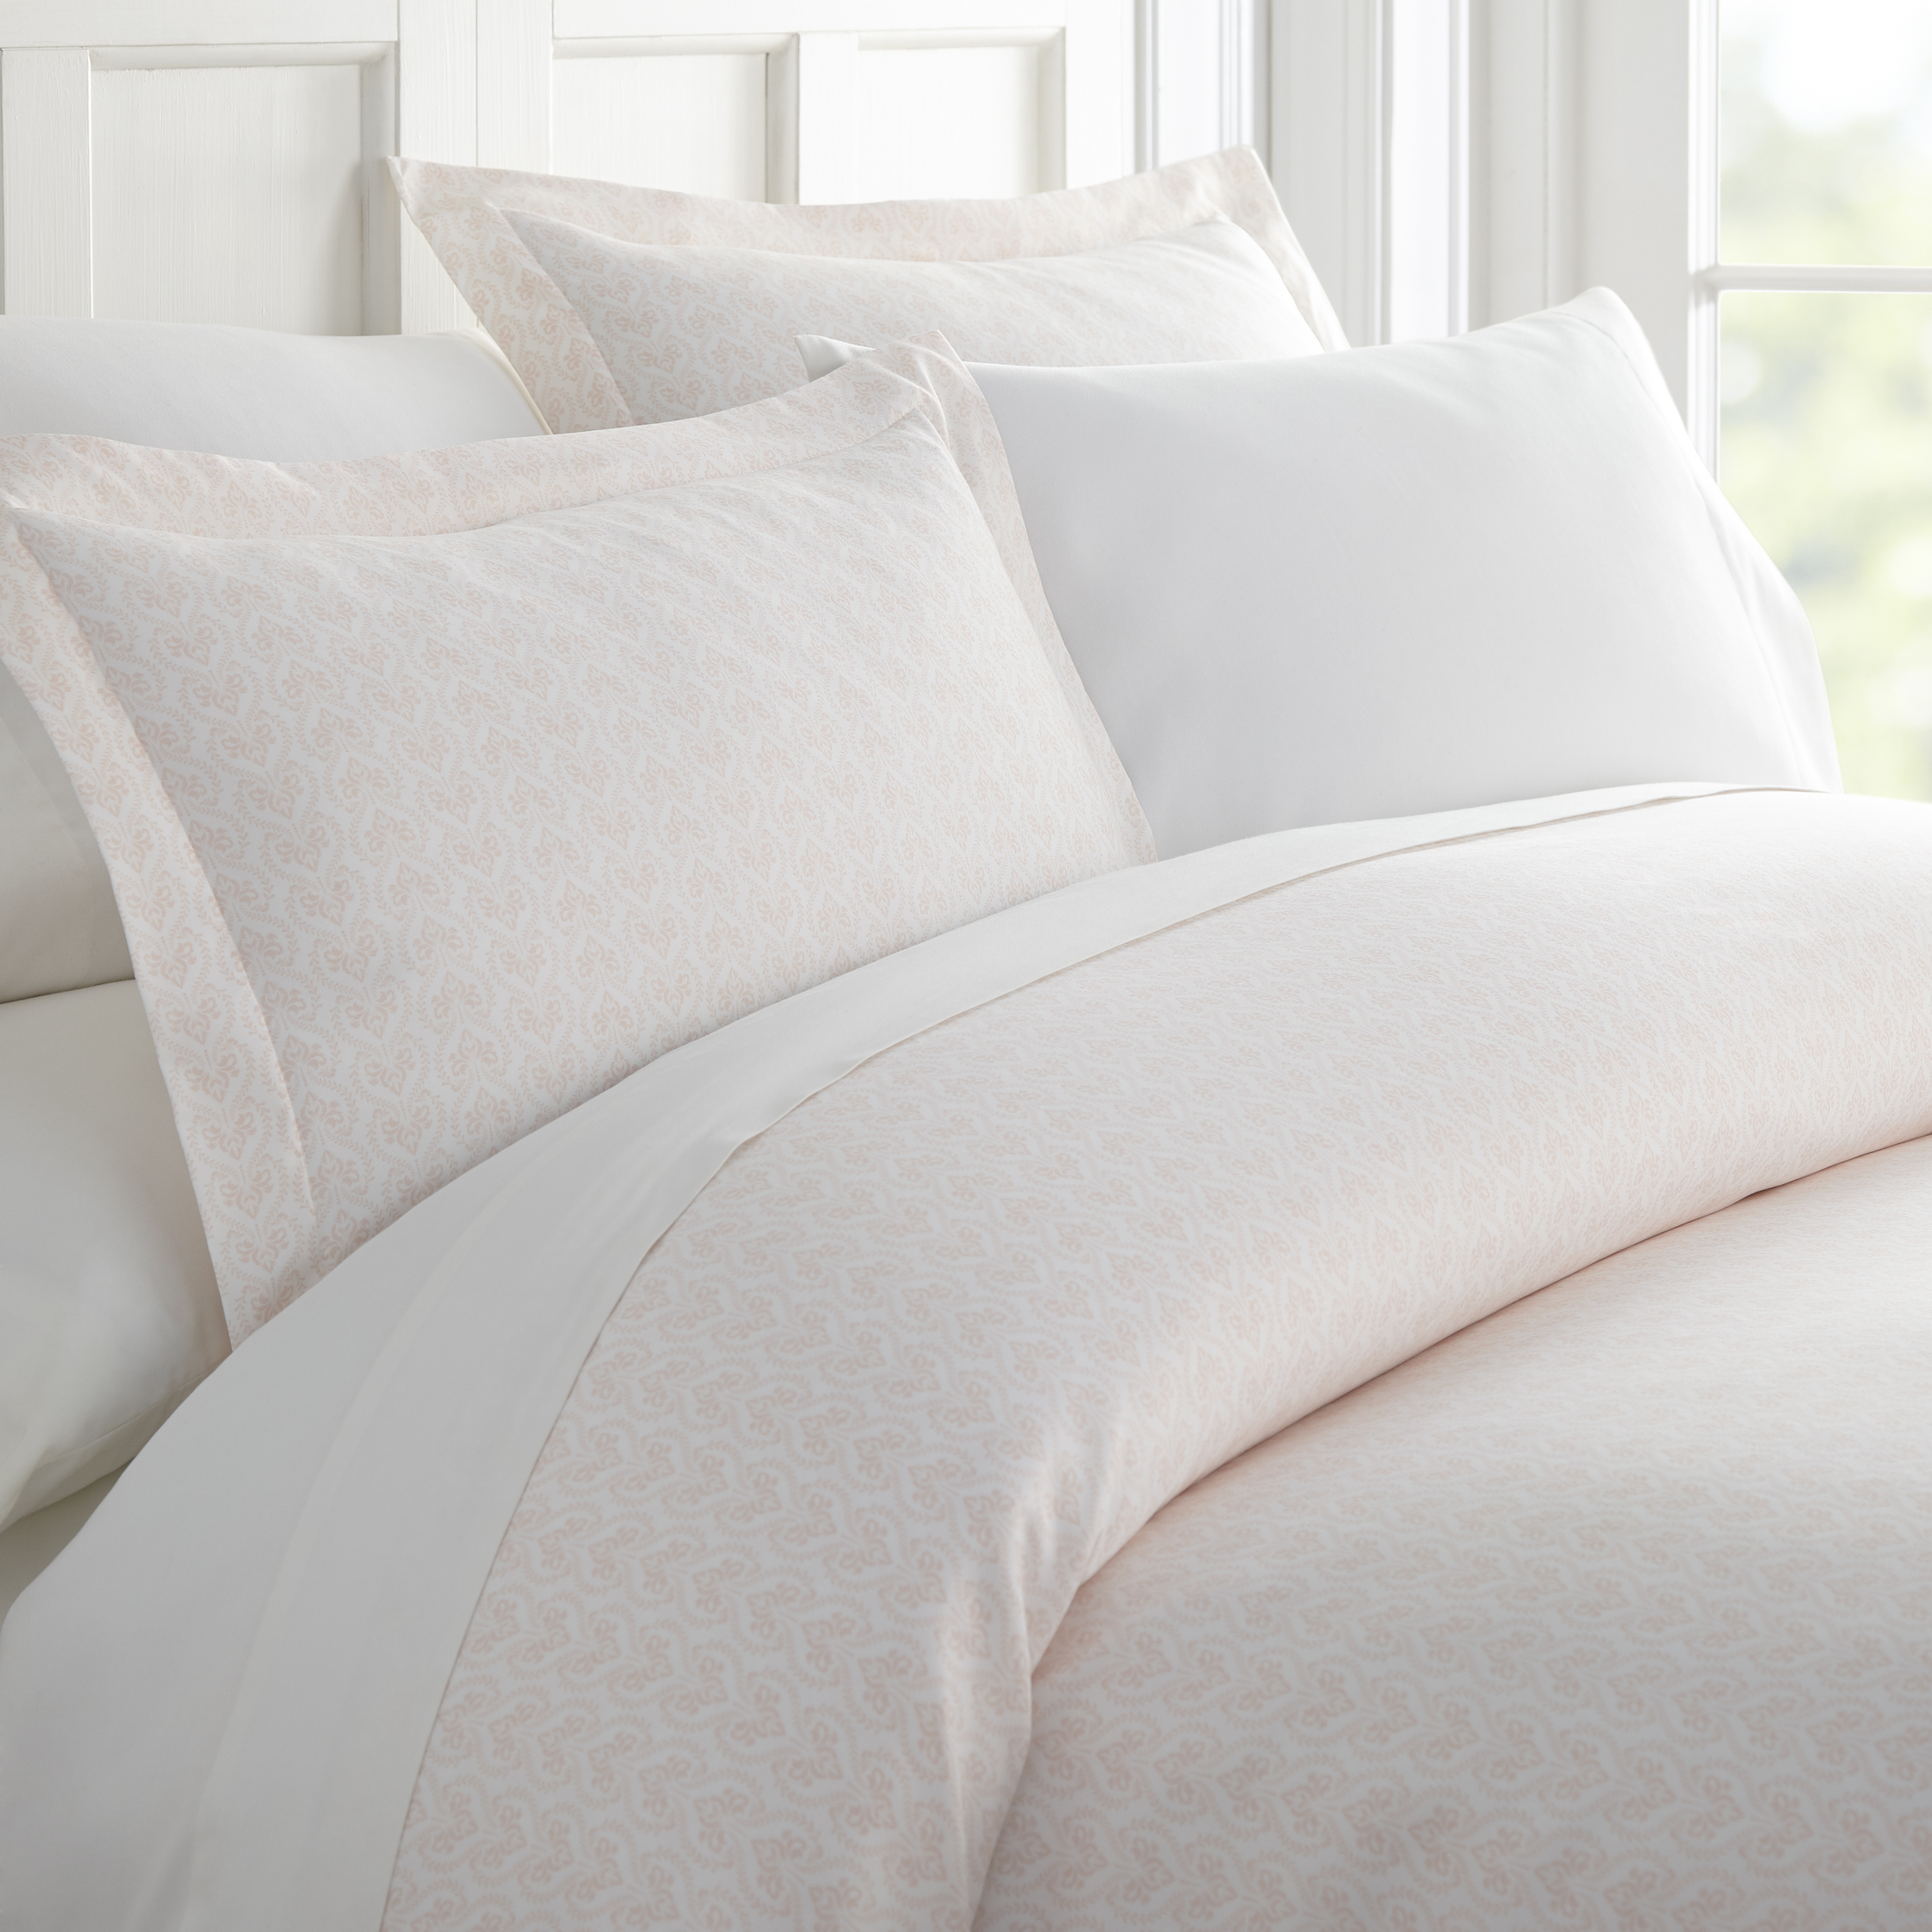 ienjoy Home Premium Ultra Soft Classic in Pink Pattern 3 Piece Duvet Cover Set